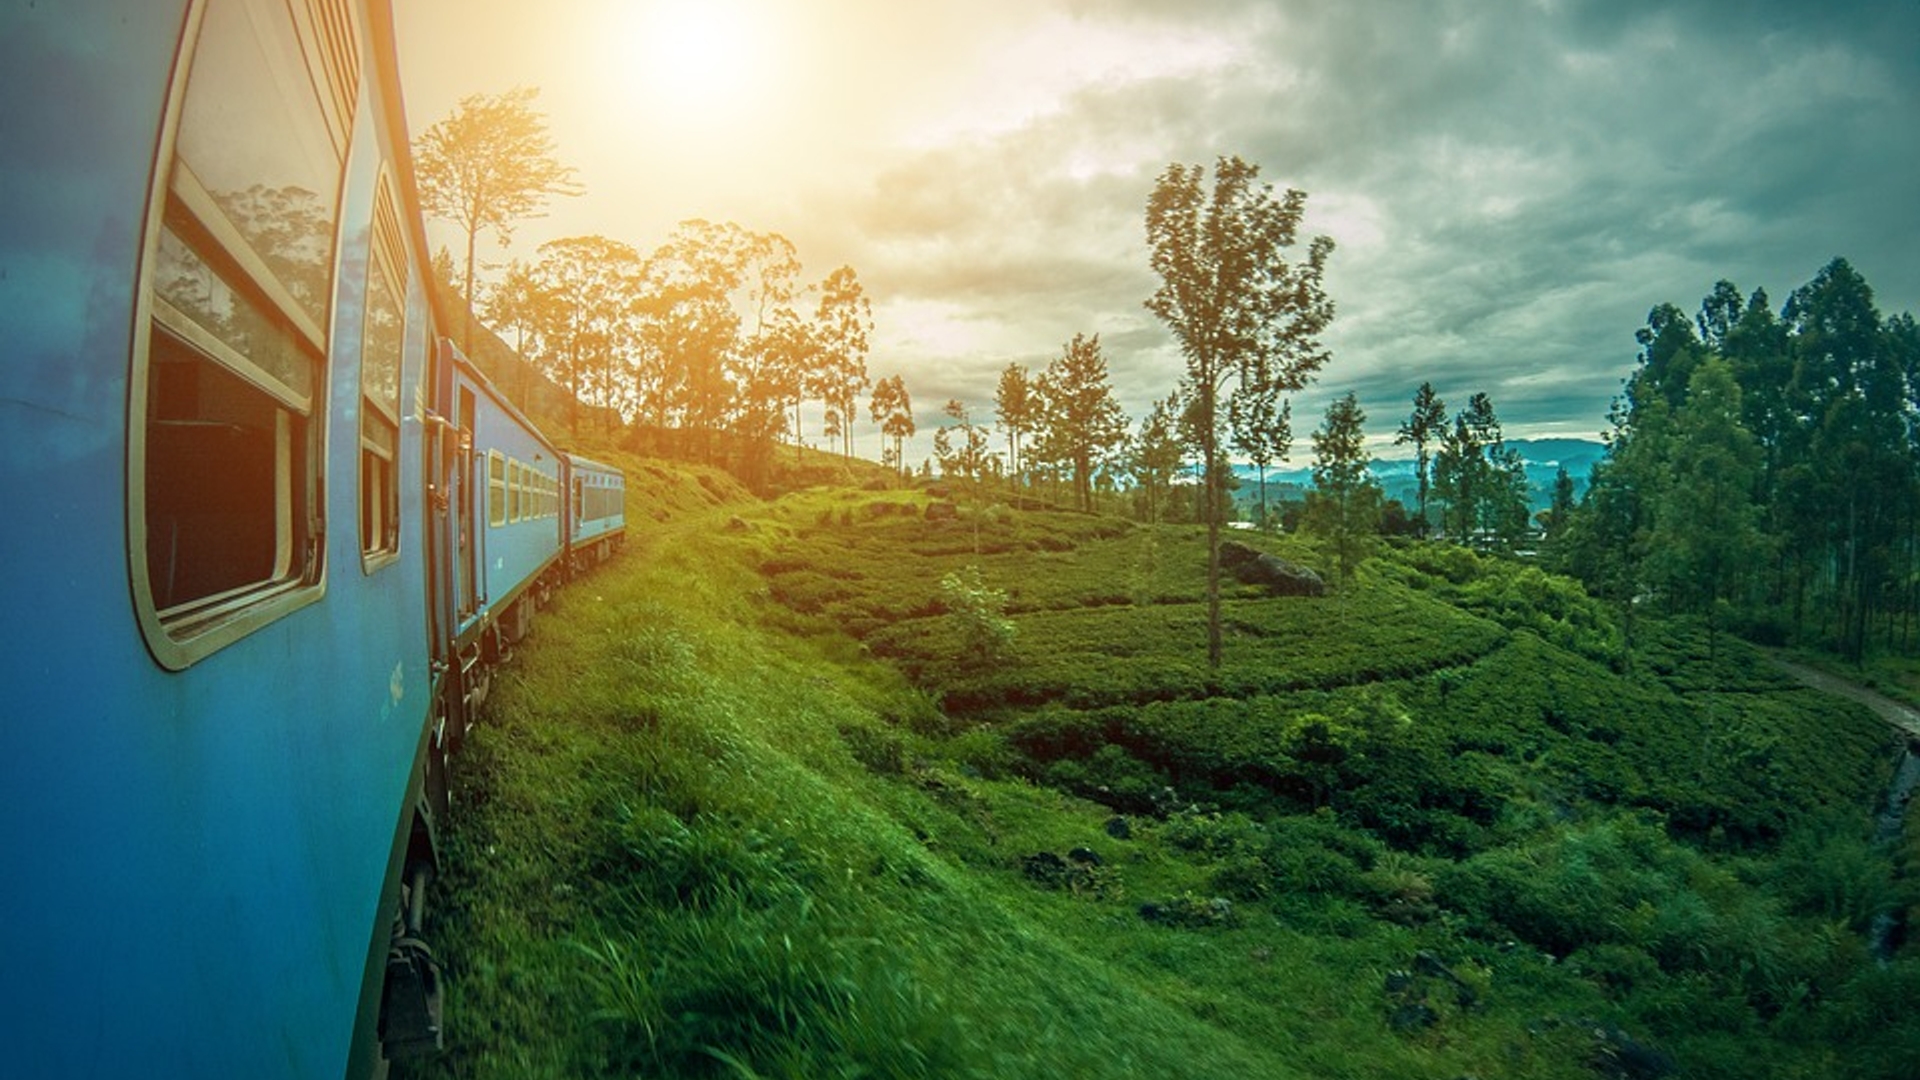 srilanka_train